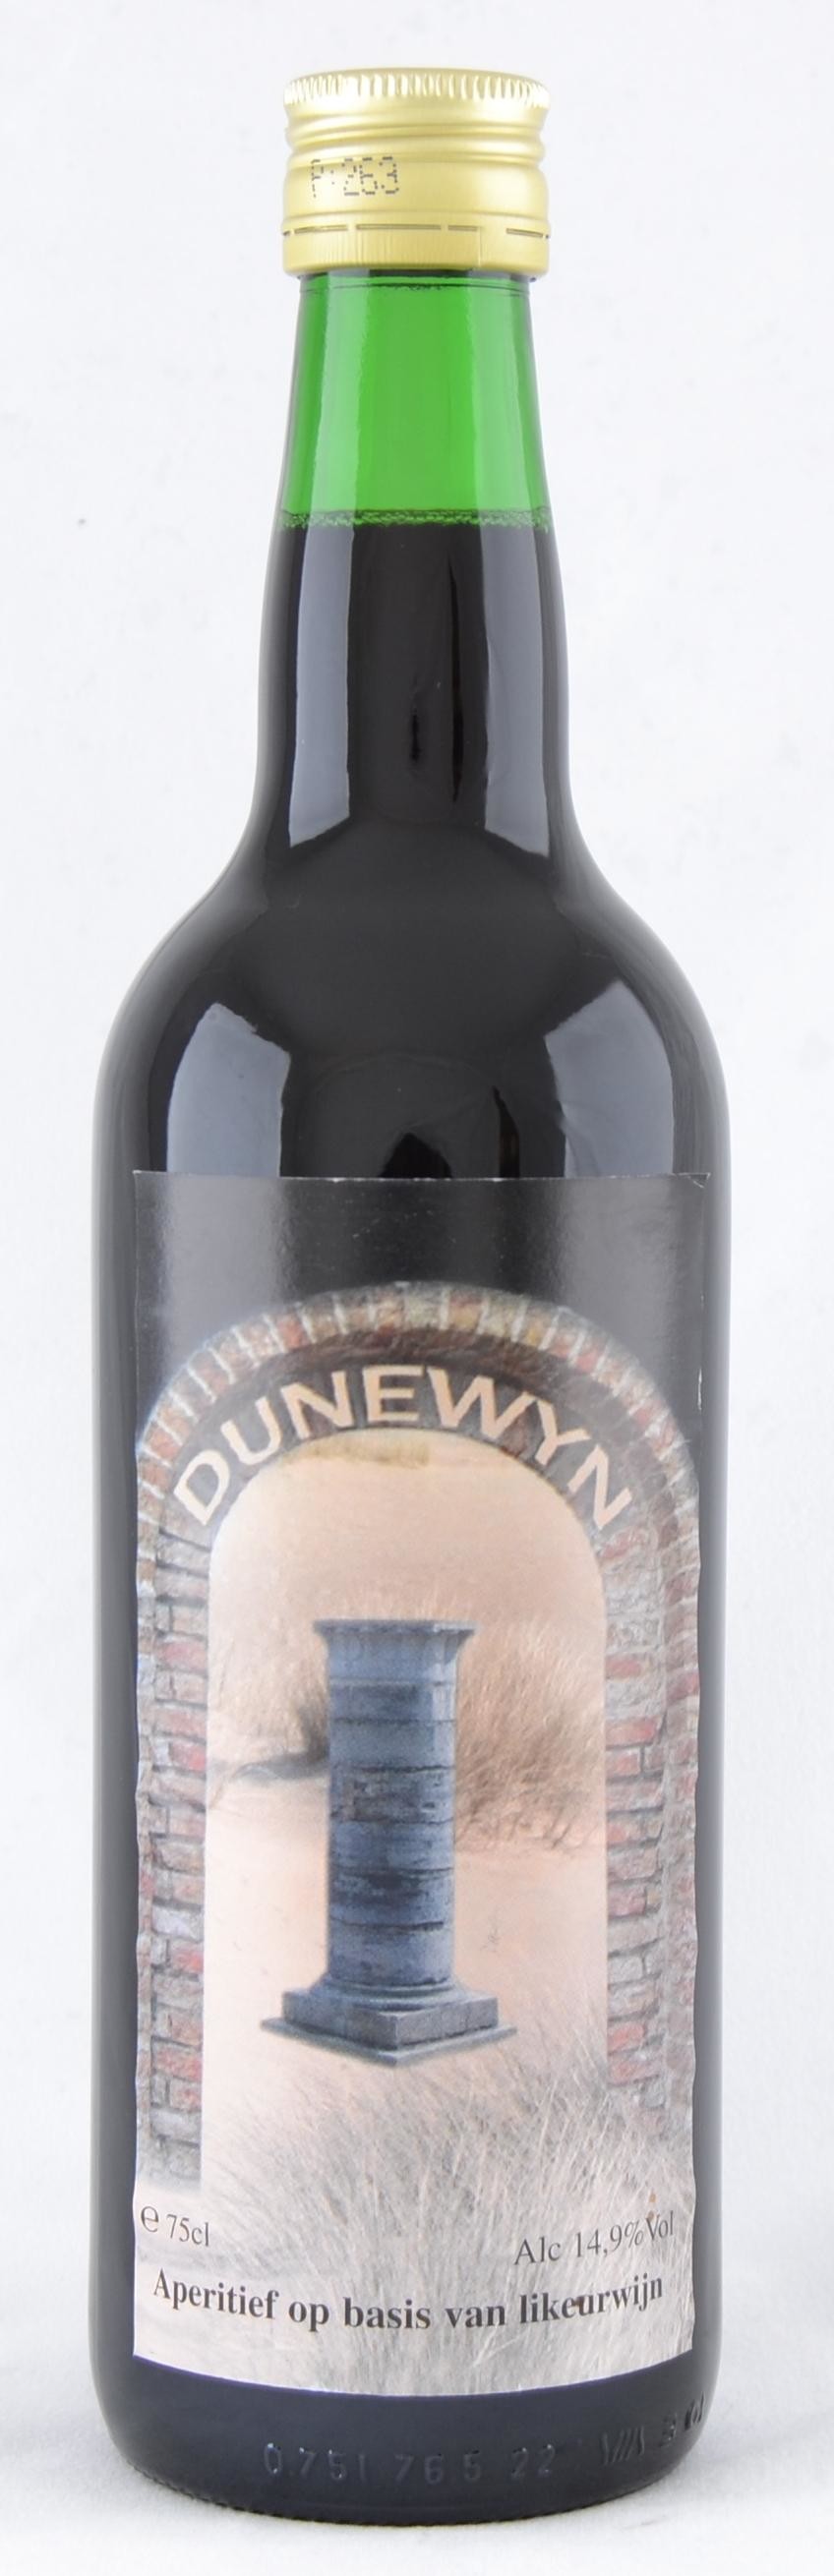 Dunewyn 75cl 14.9% aperitief